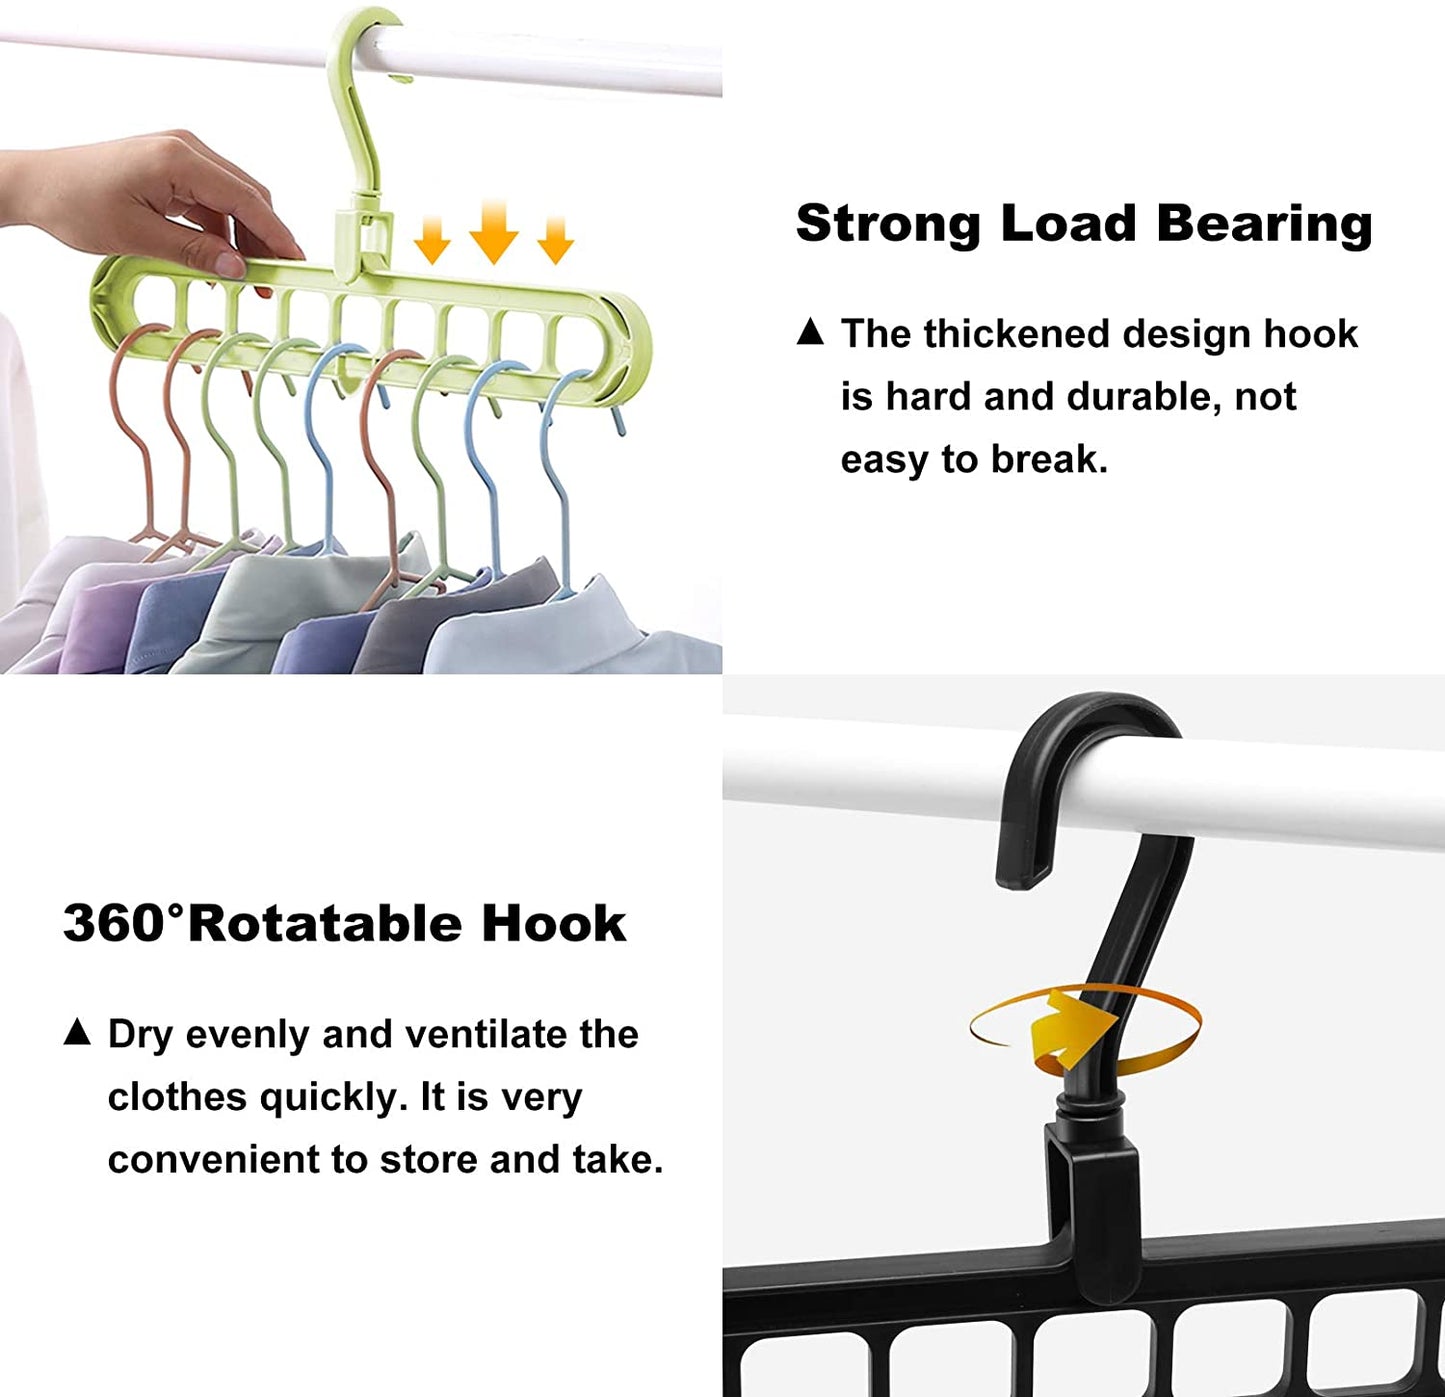 9 Hole Magic Rotating Hanger | Smart Cloth Organizer - DS Traders